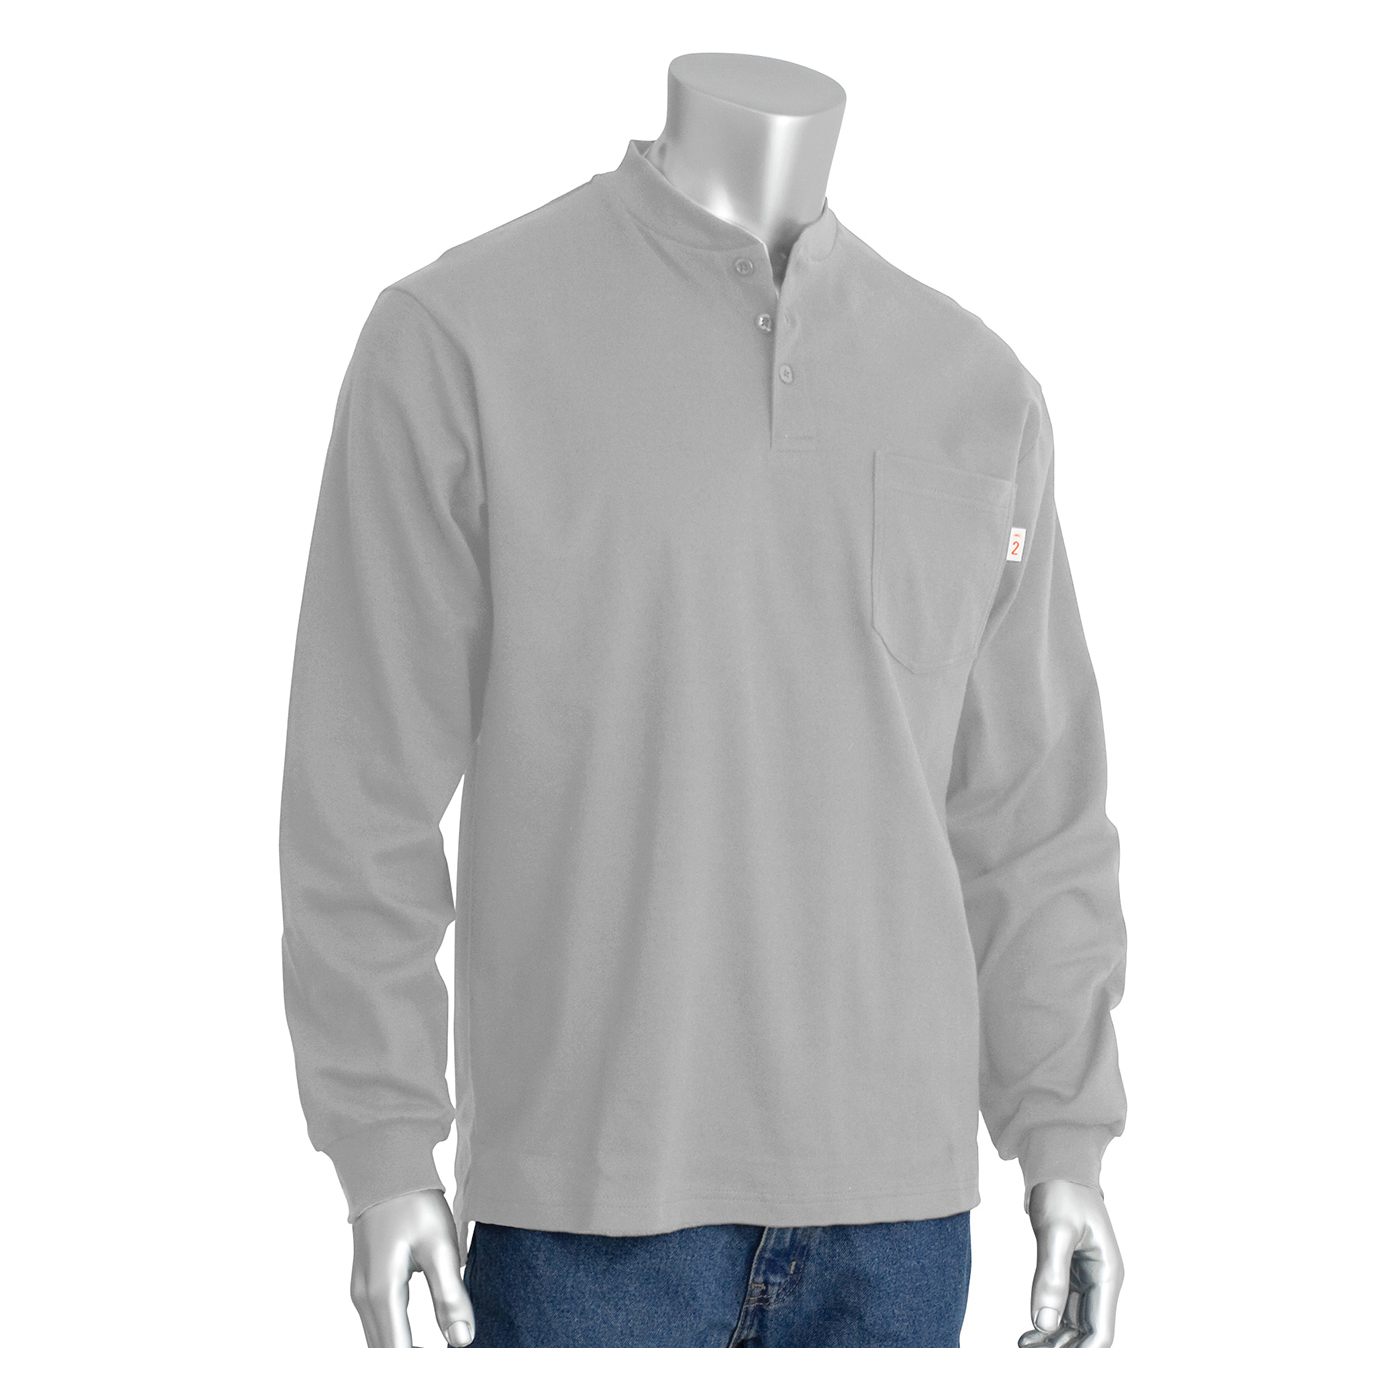 PIP® 385-FRHN-(LG)-XL Arc and Flame-Resistant Long Sleeve Henley Shirt, XL, Light Gray, Cotton Interlock Knit, 32 in L